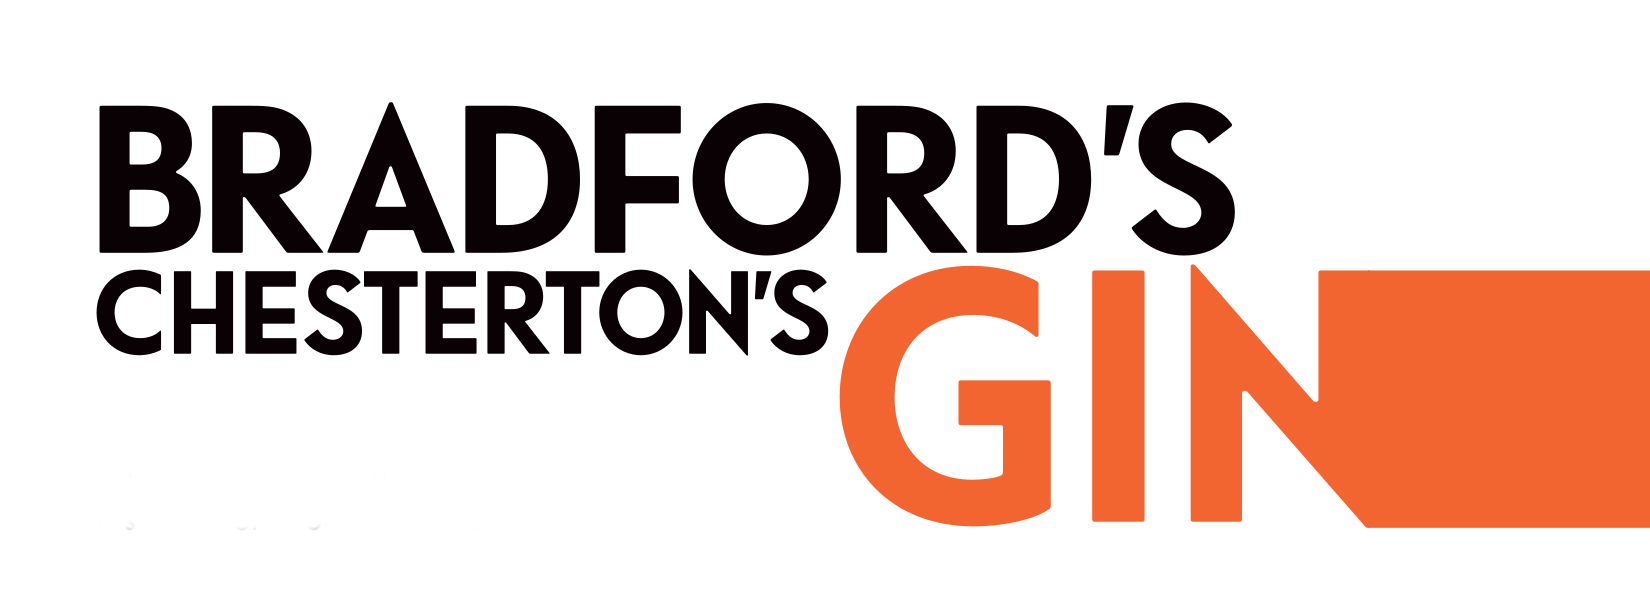 Bradford's Chesterton's Gin-image